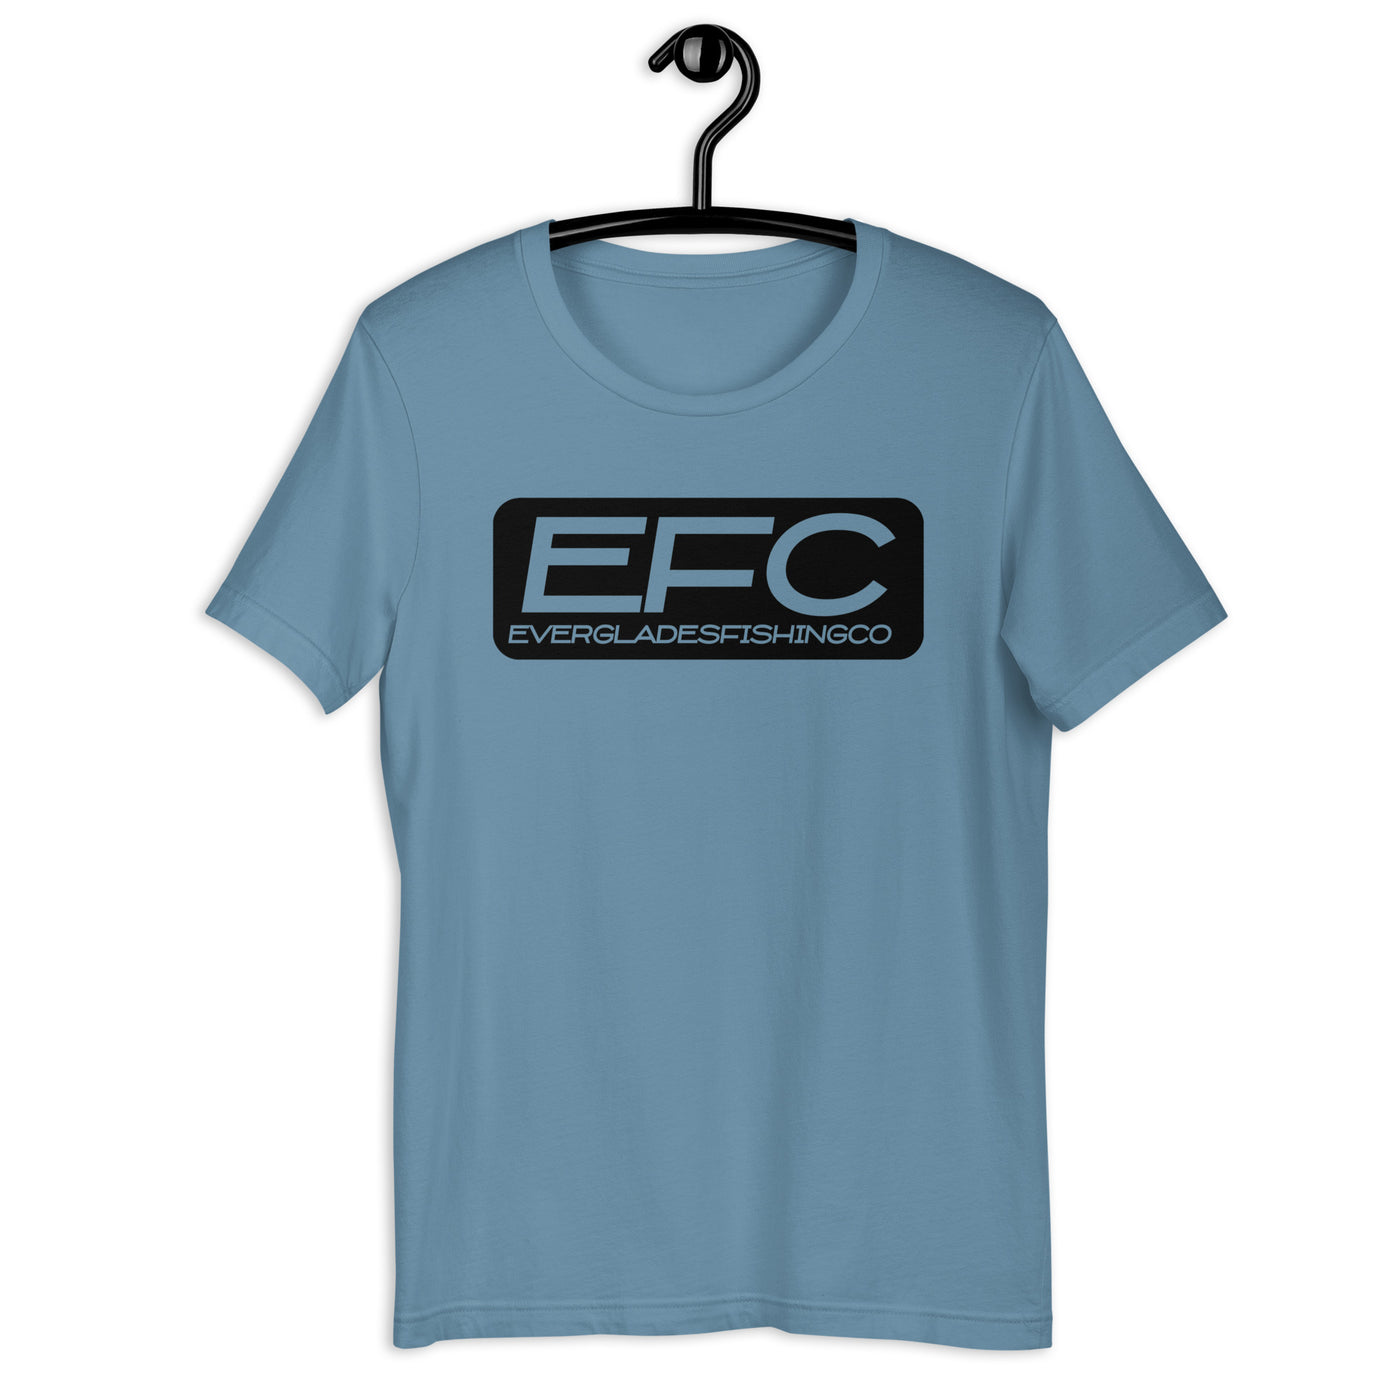 EFC t-shirt